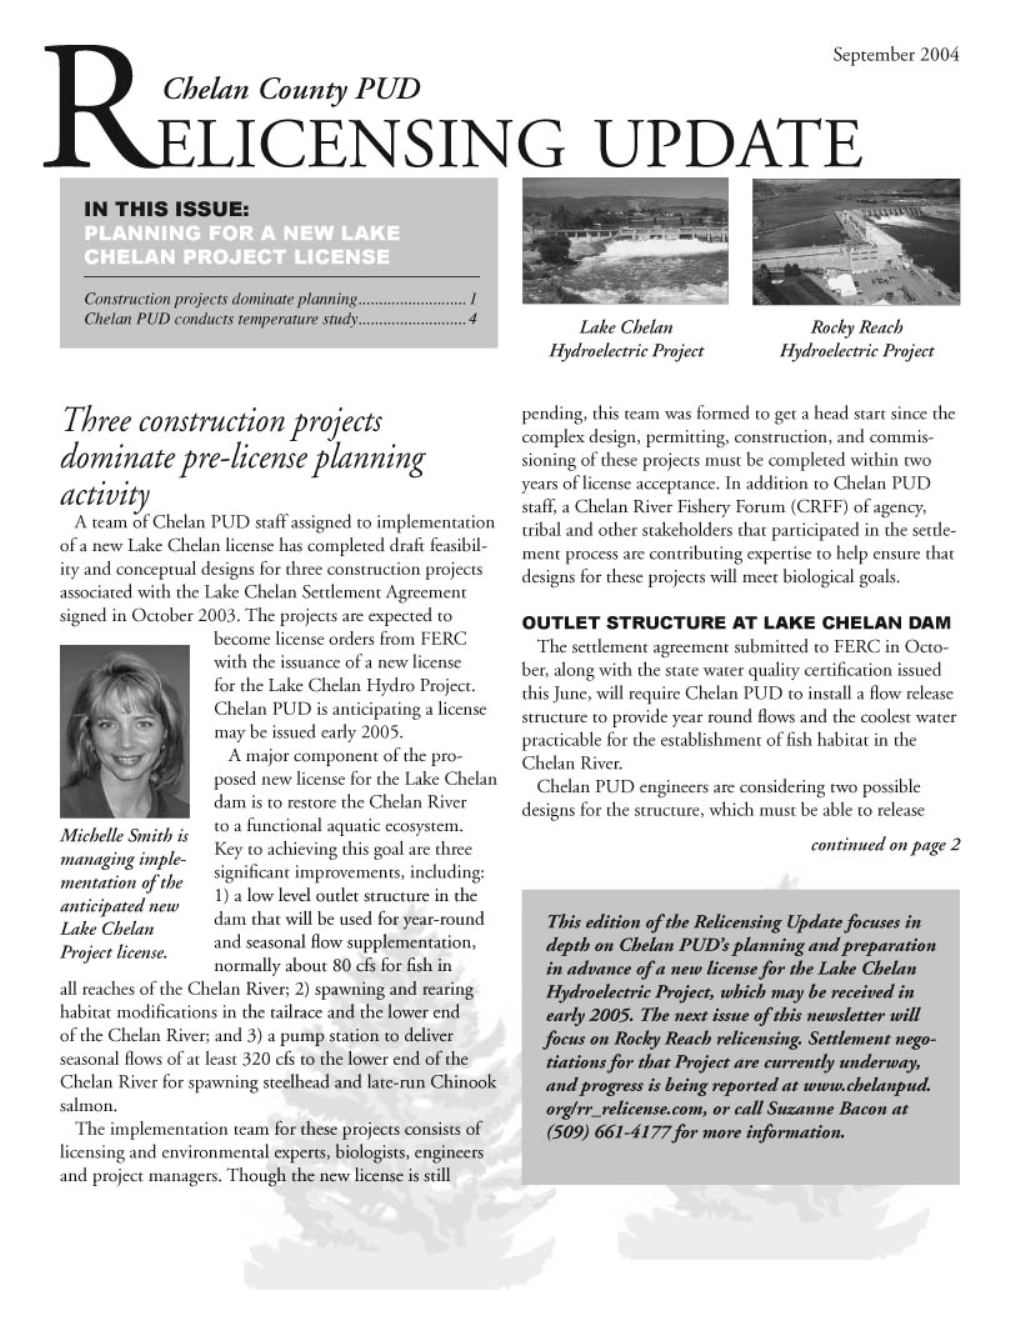 Issue No. 23, September 2004